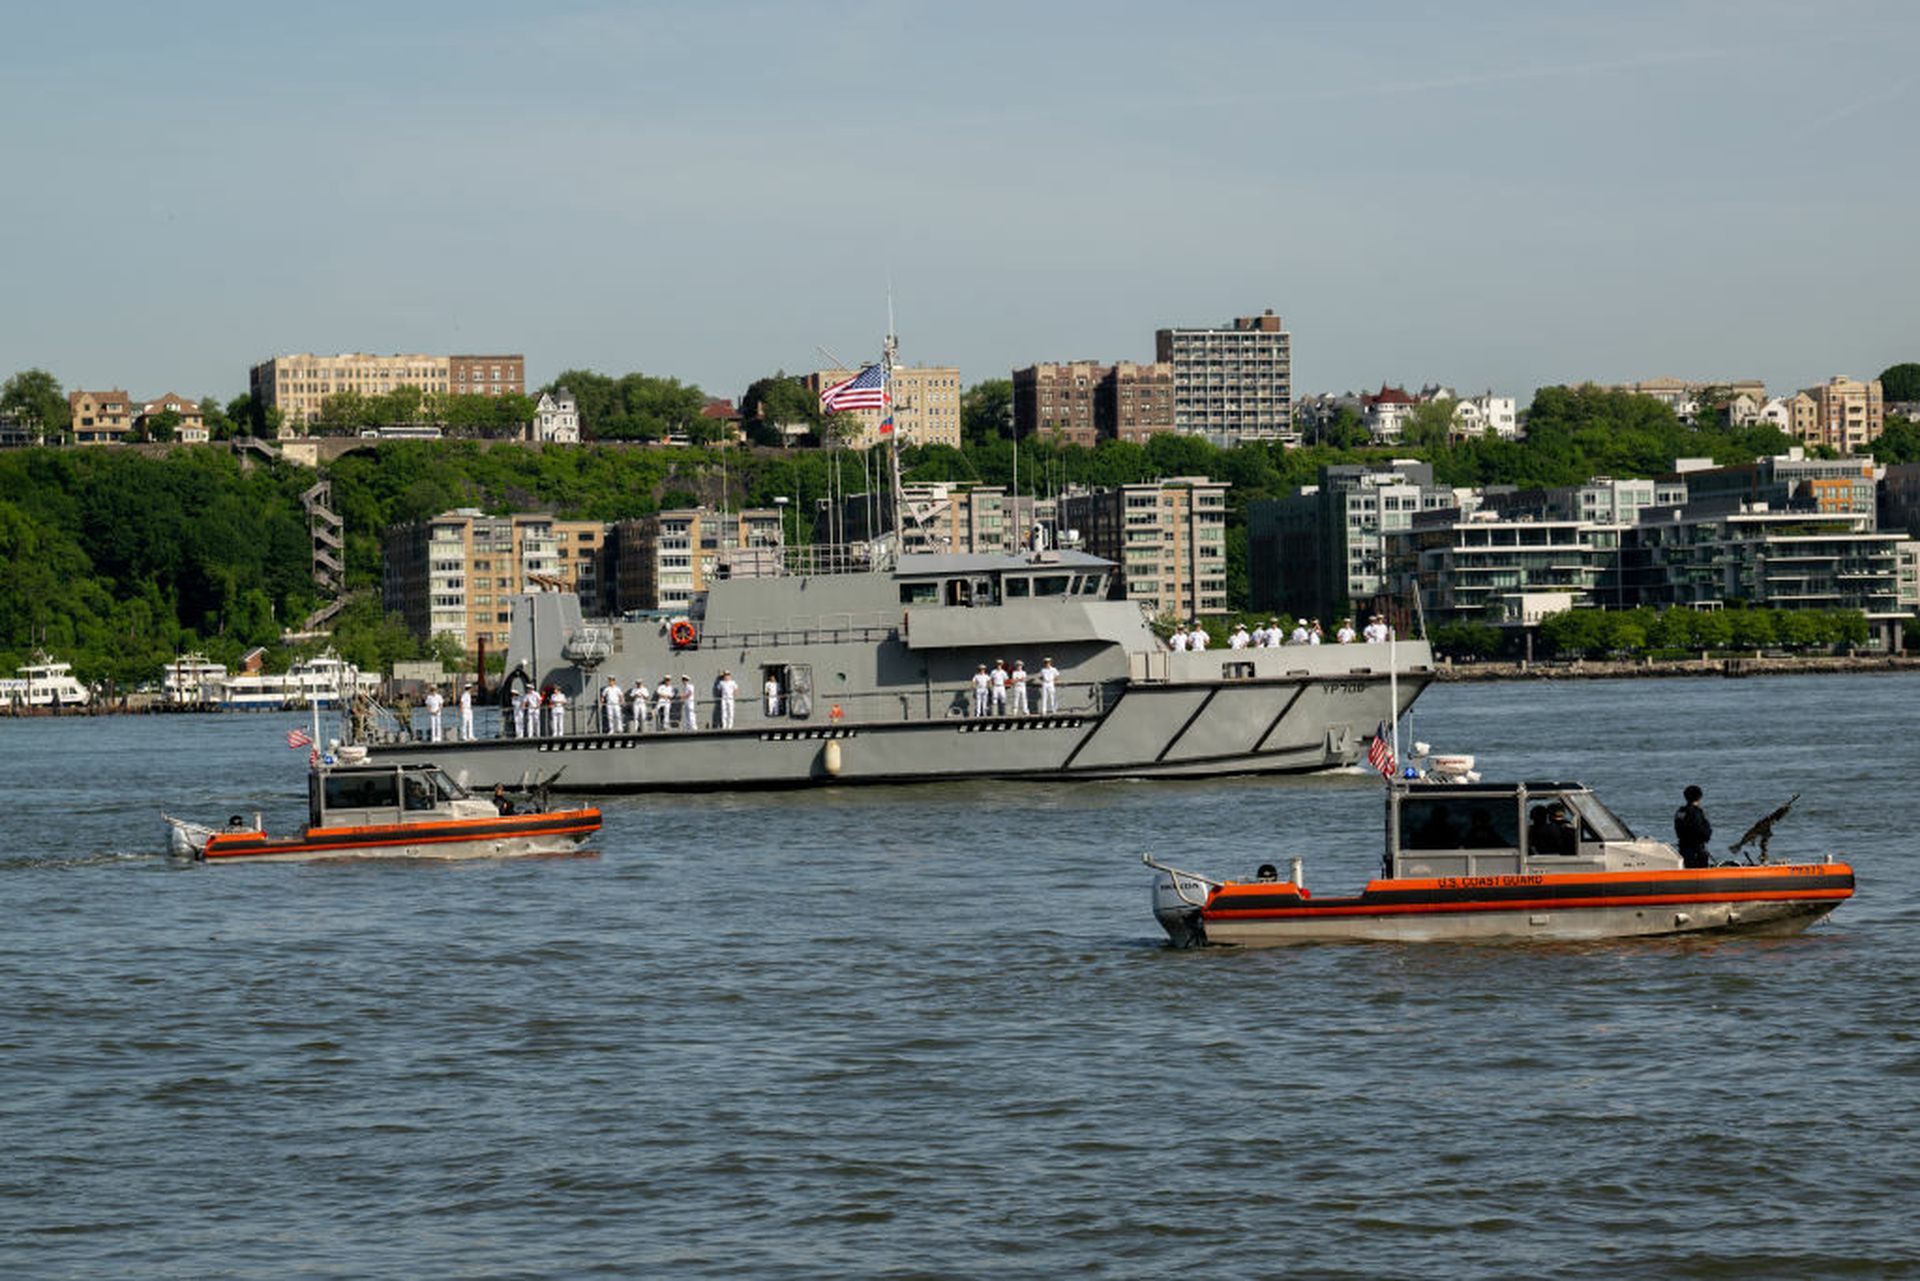 U.S. Coast Guard vessels patrol as a Navy ship arrives for Fleet Week in New York City.